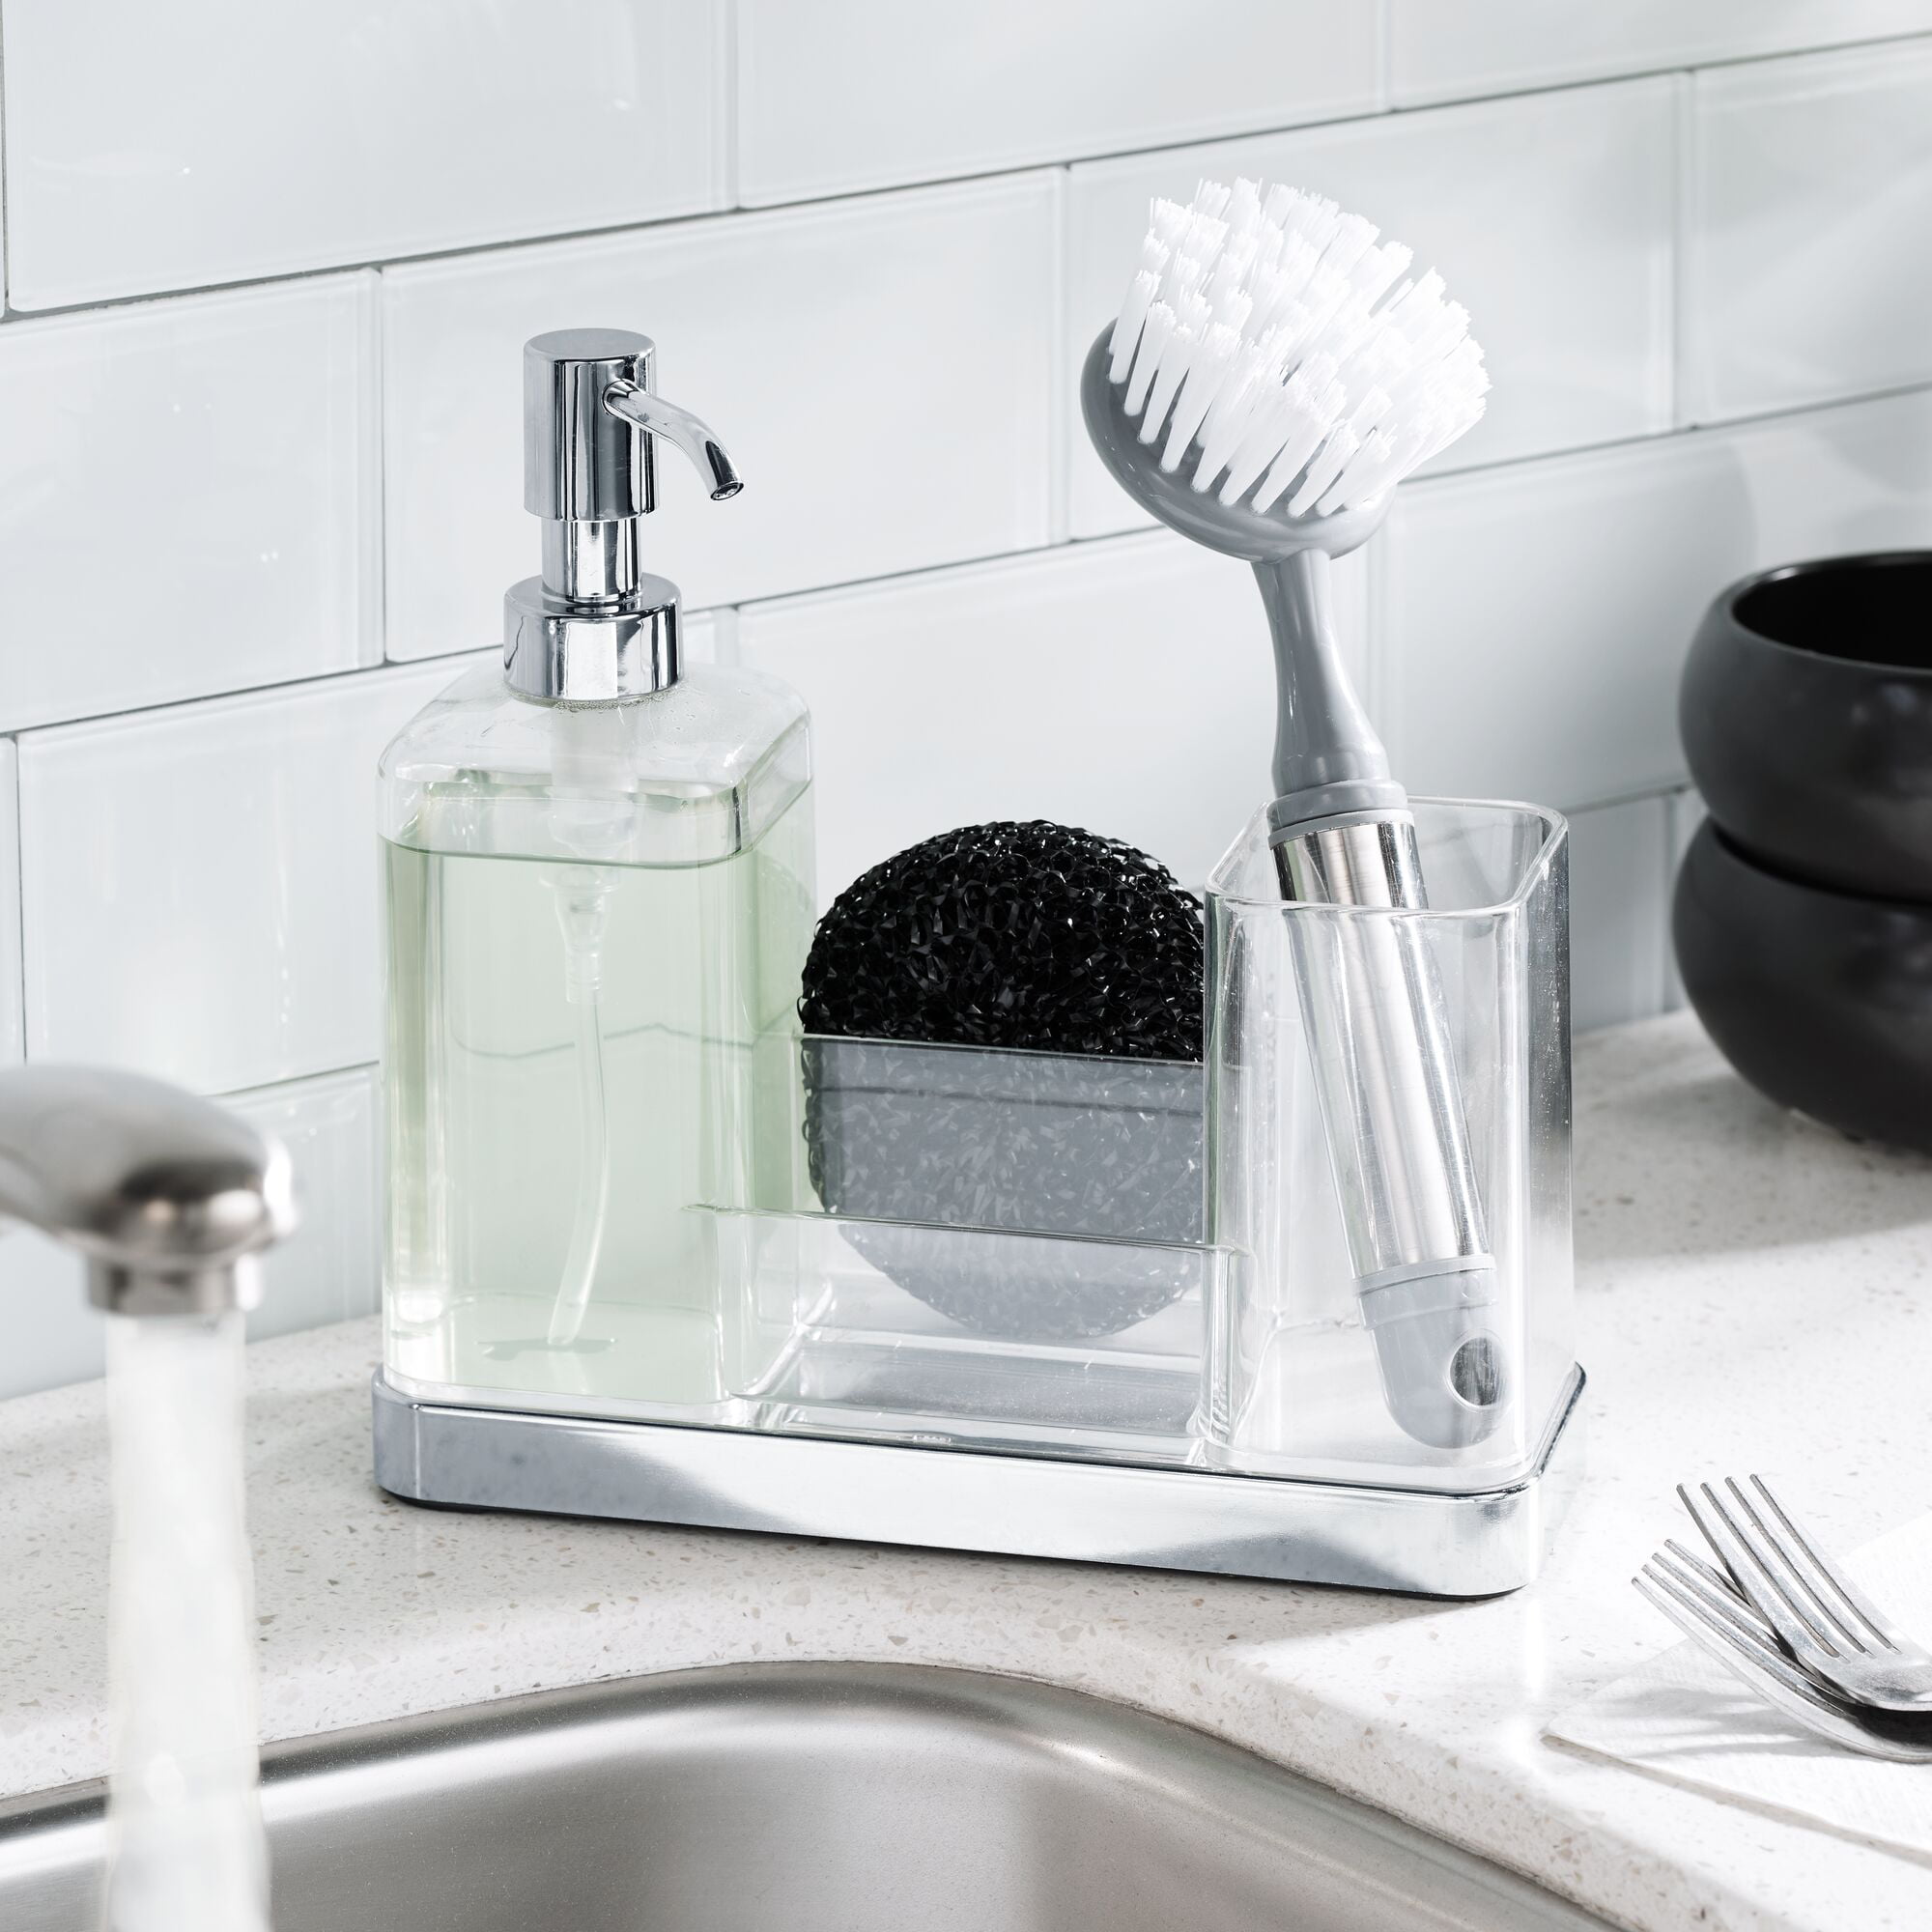 Mdesign Plastic Kitchen Sink Countertop Hand Soap Dispenser, Matte